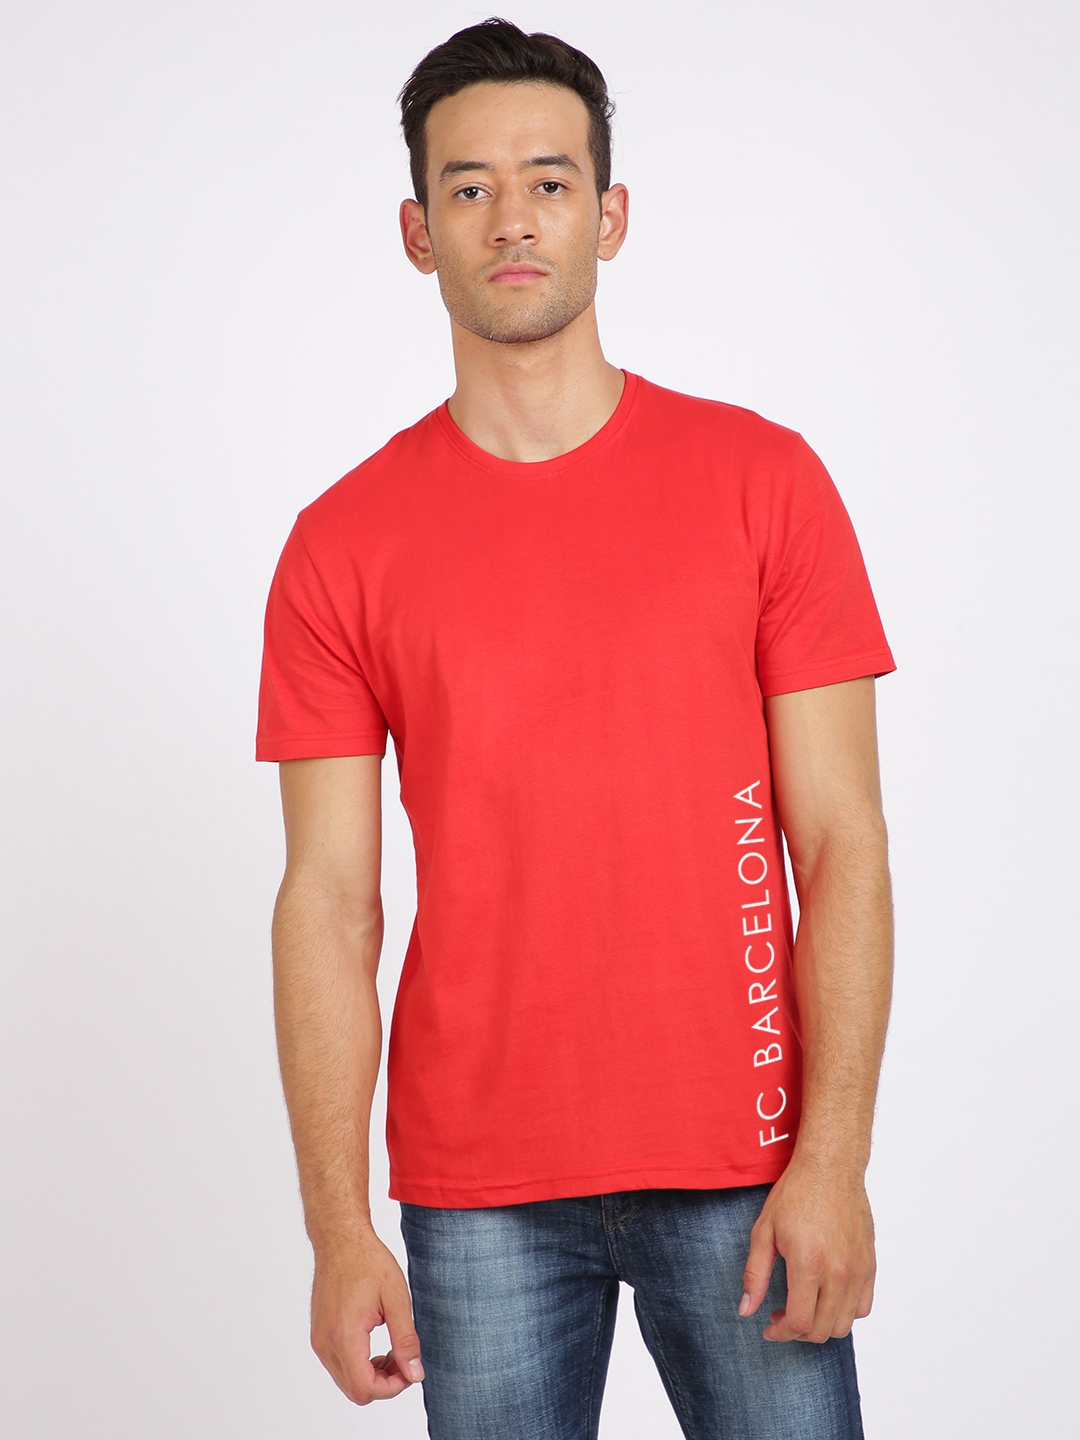 BLACK RADIO Men's Round Neck Printed Red T shirt